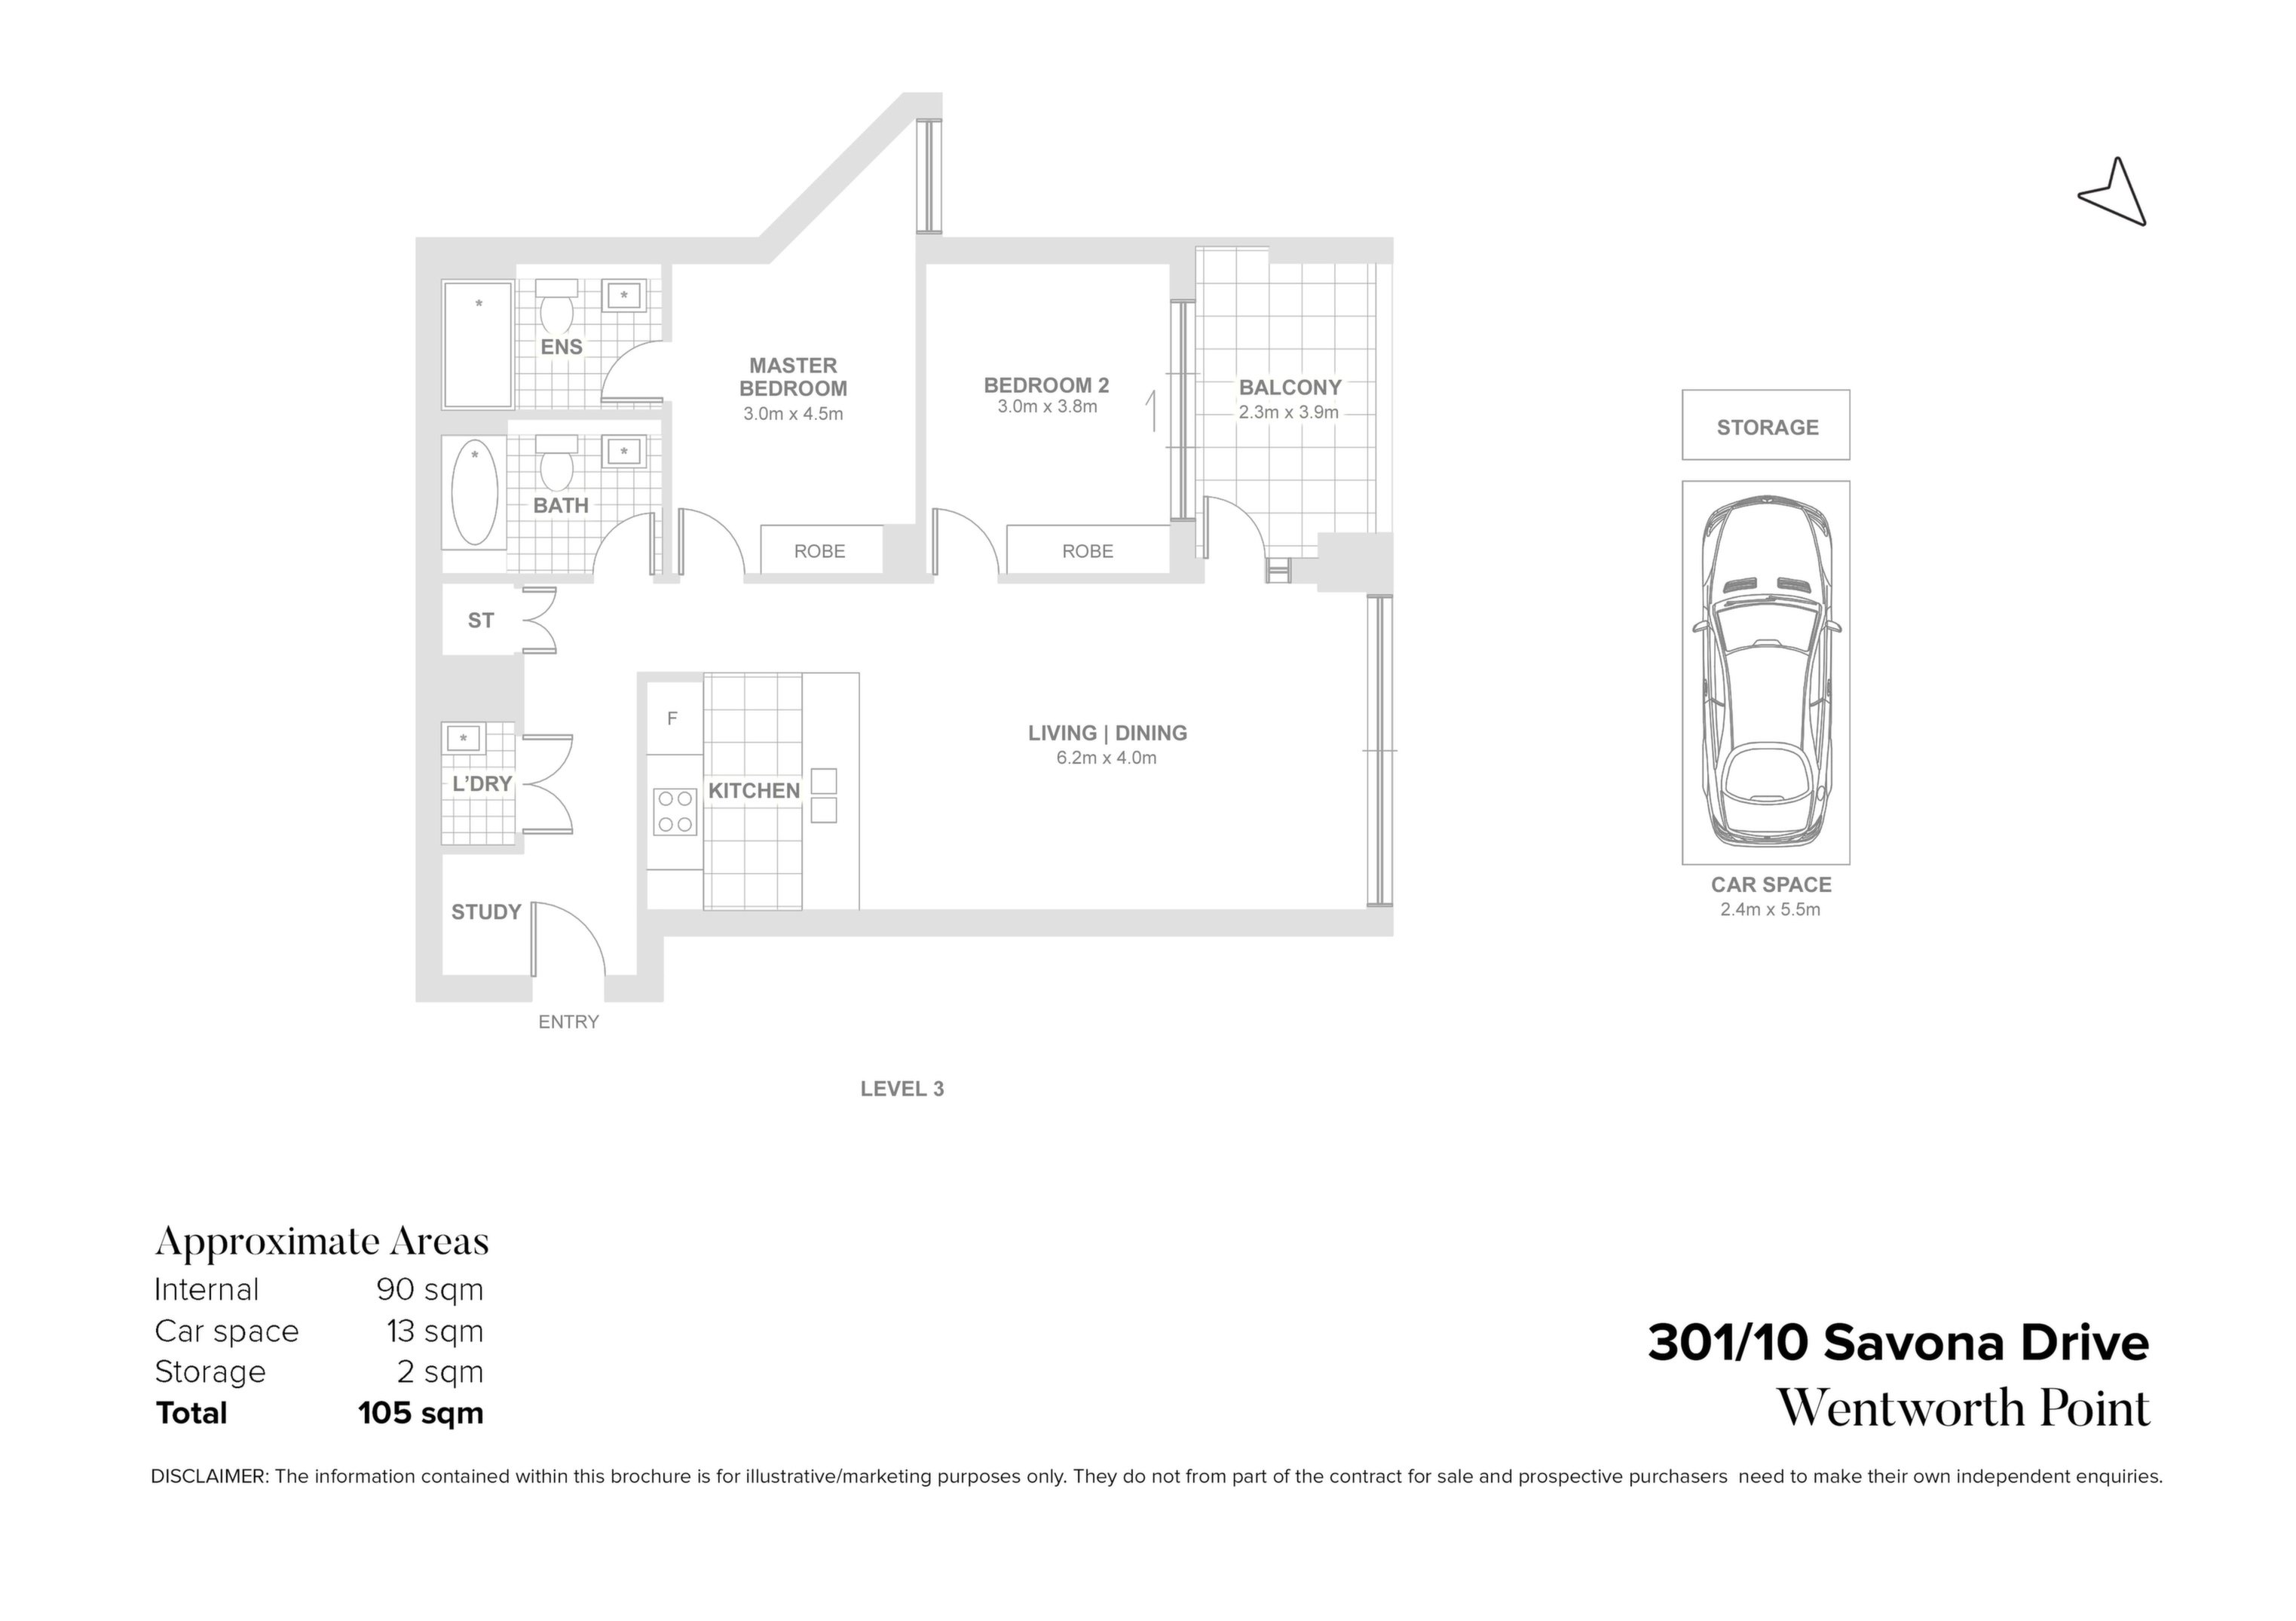 301/10 Savona Drive, Wentworth Point Sold by Chidiac Realty - floorplan